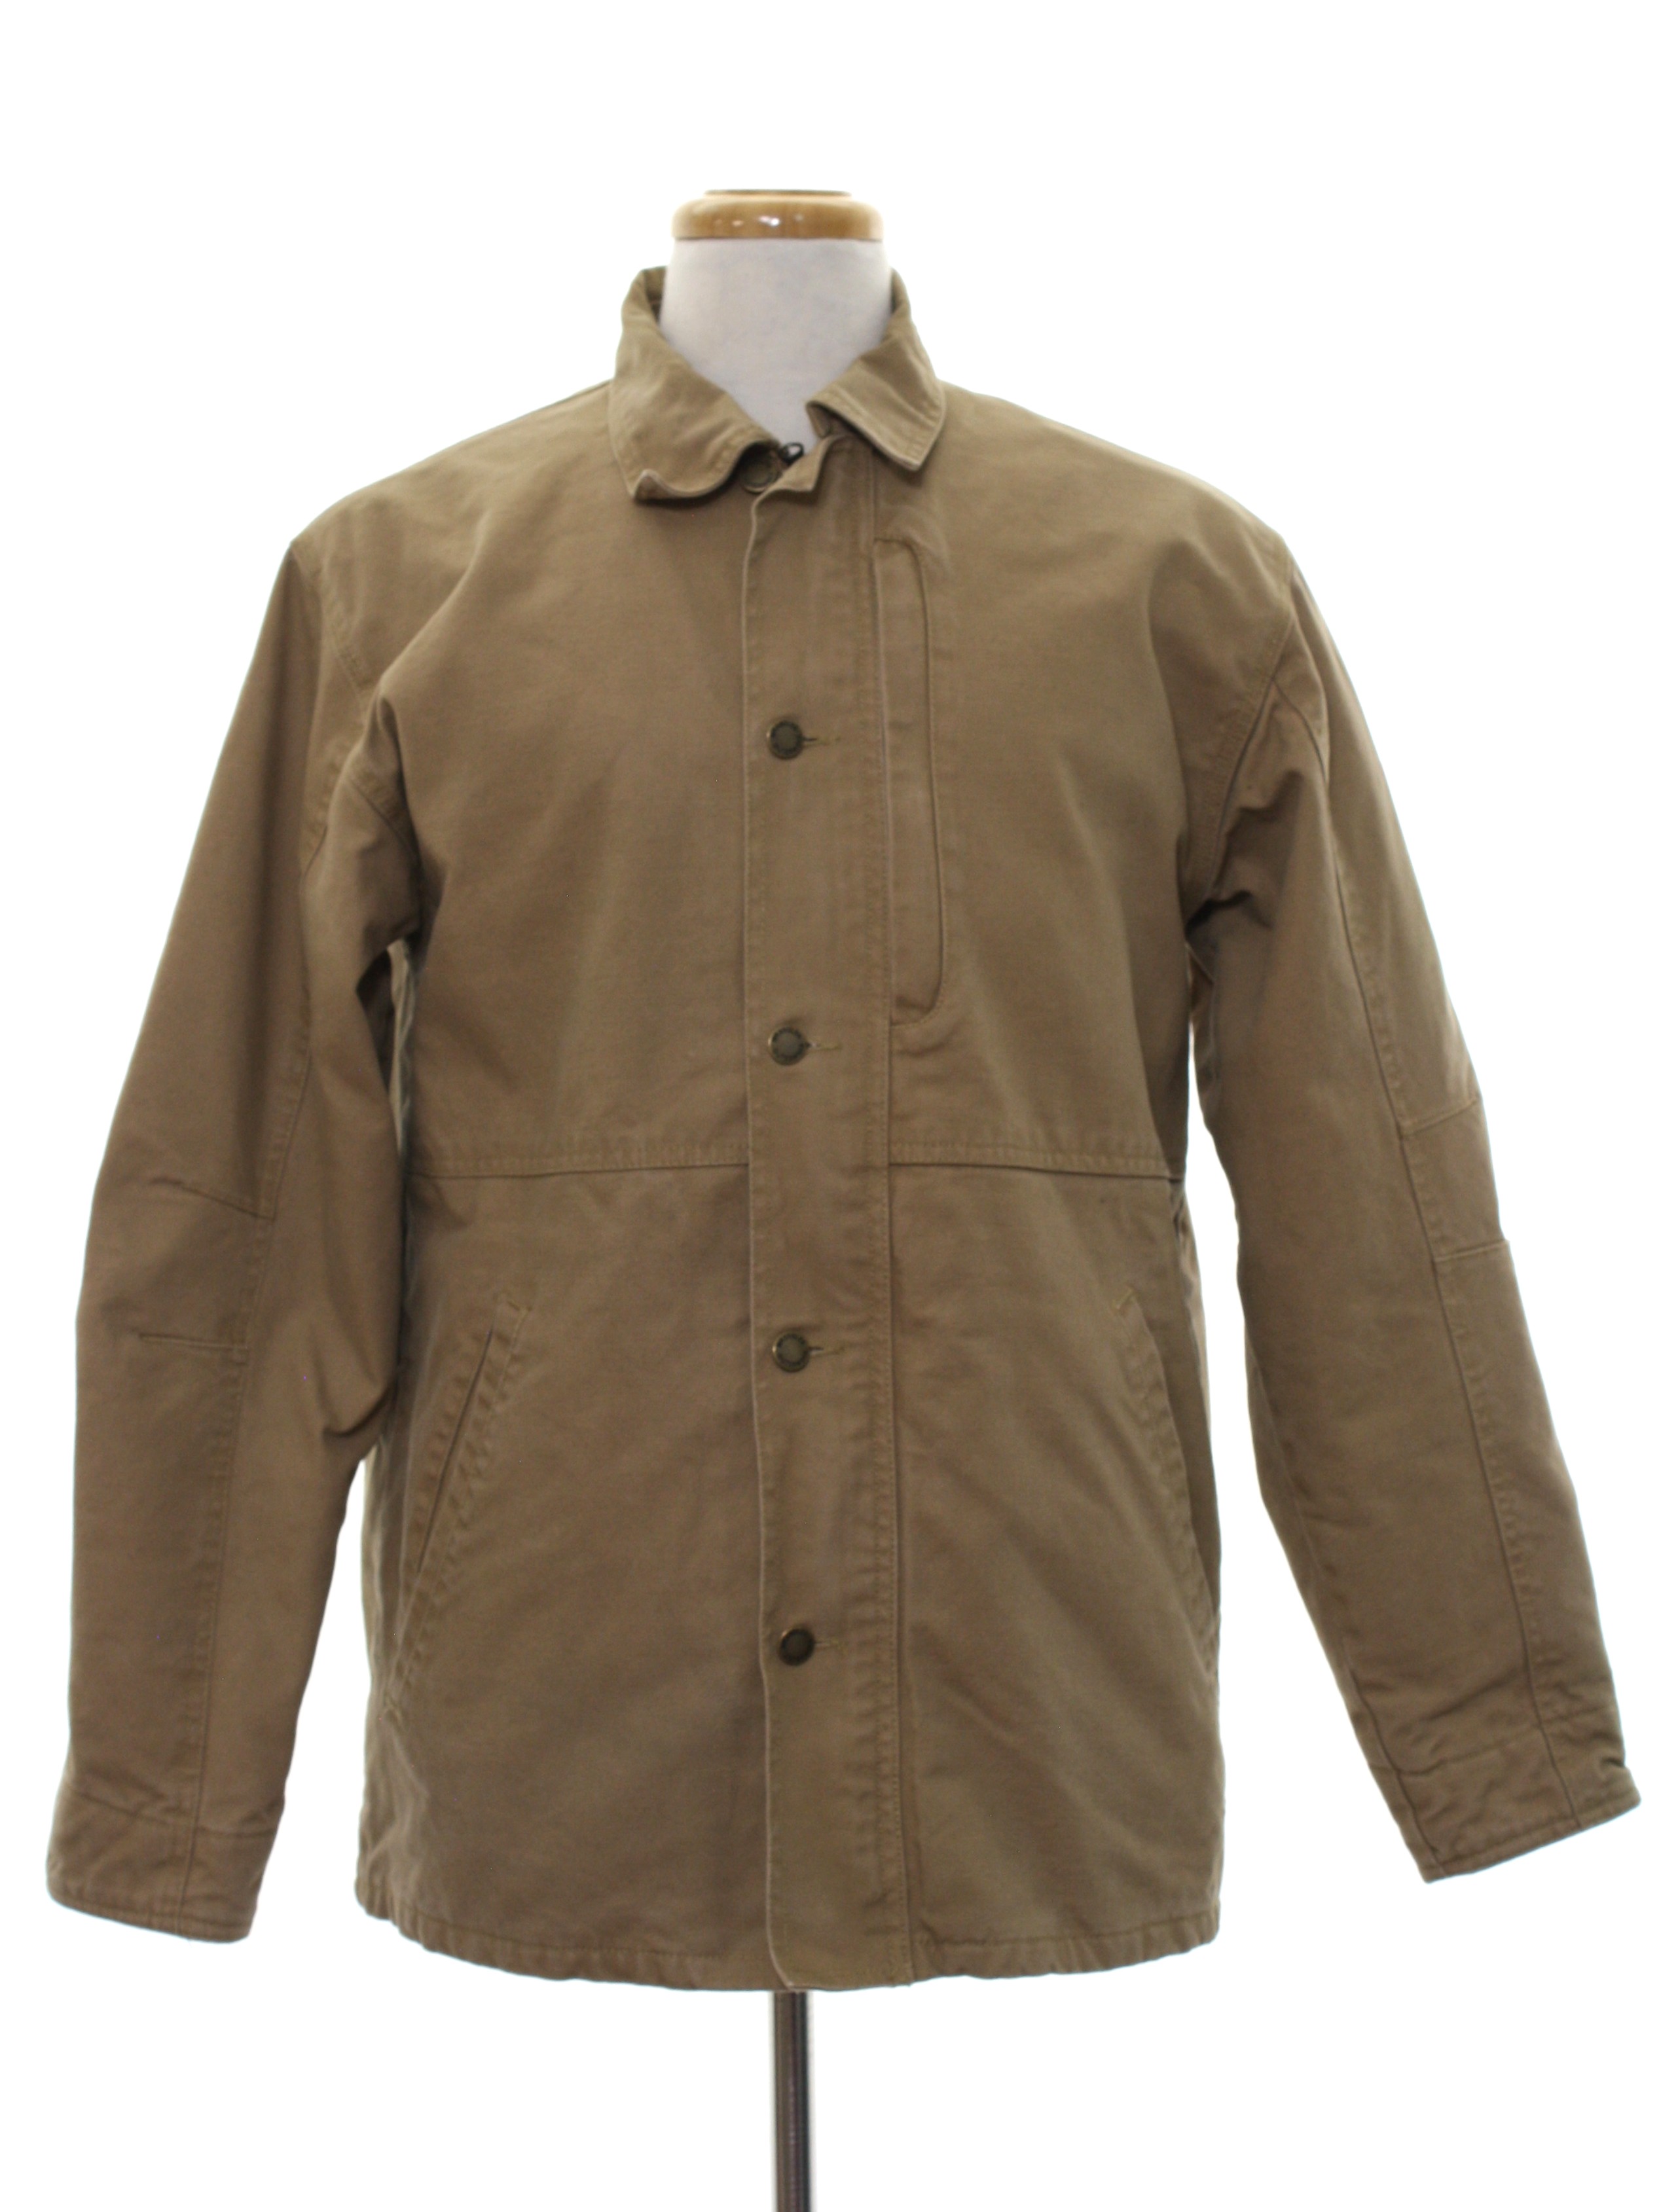 90s Retro Jacket: 90s or Newer -Wrangler- Mens tan background cotton ...